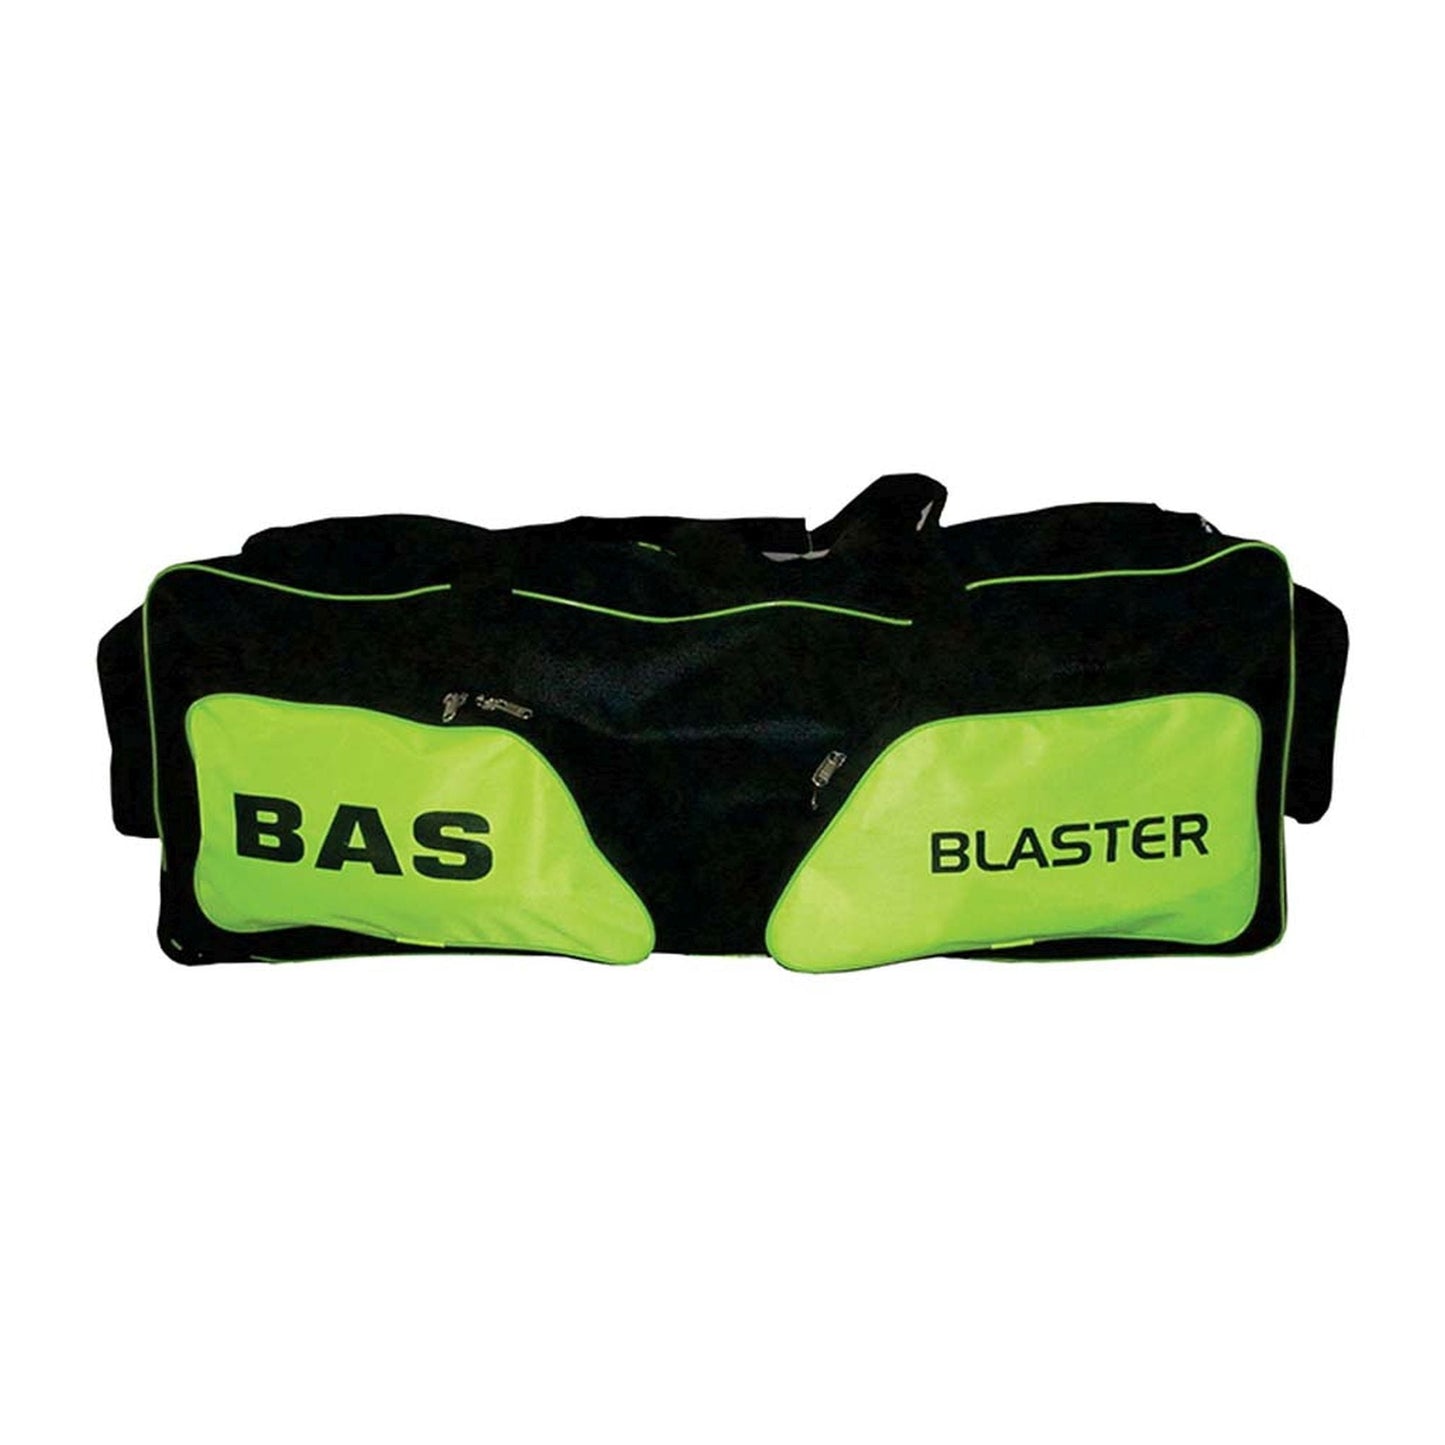 Cricket (Bas) (Blaster Wheelie Bag)